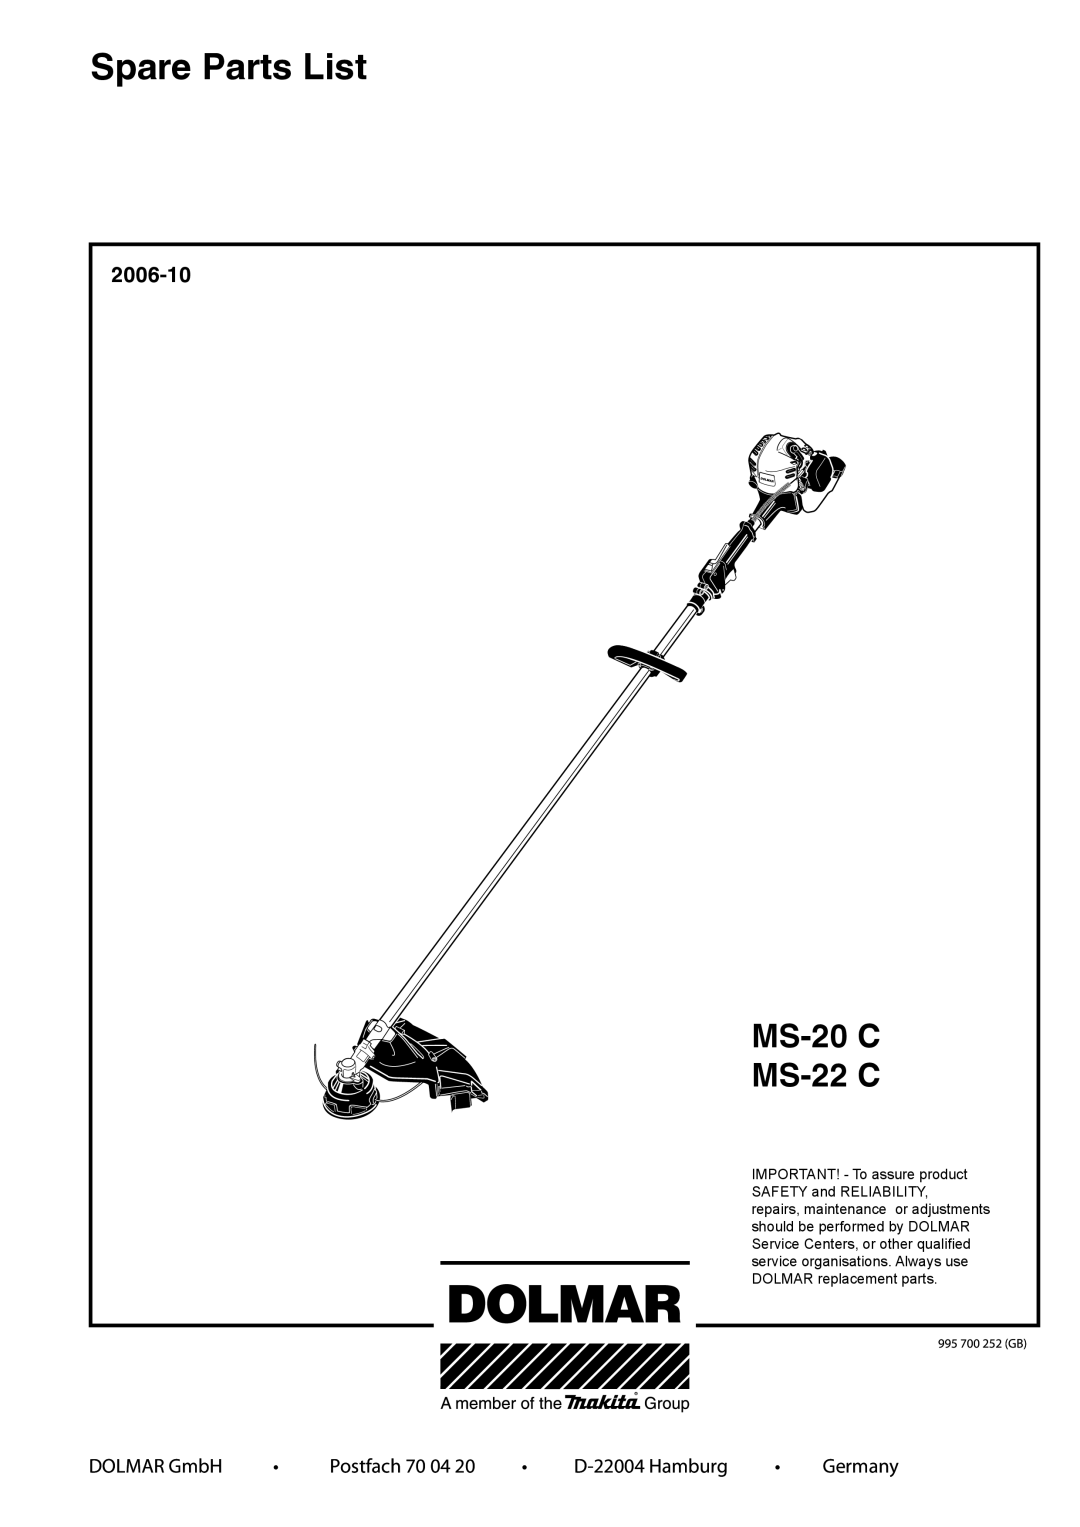 Dolmar manual Spare Parts List, MS-20 C MS-22 C, 2006-10, DOLMAR GmbH, Postfach 70 04, D-22004 Hamburg, Germany 